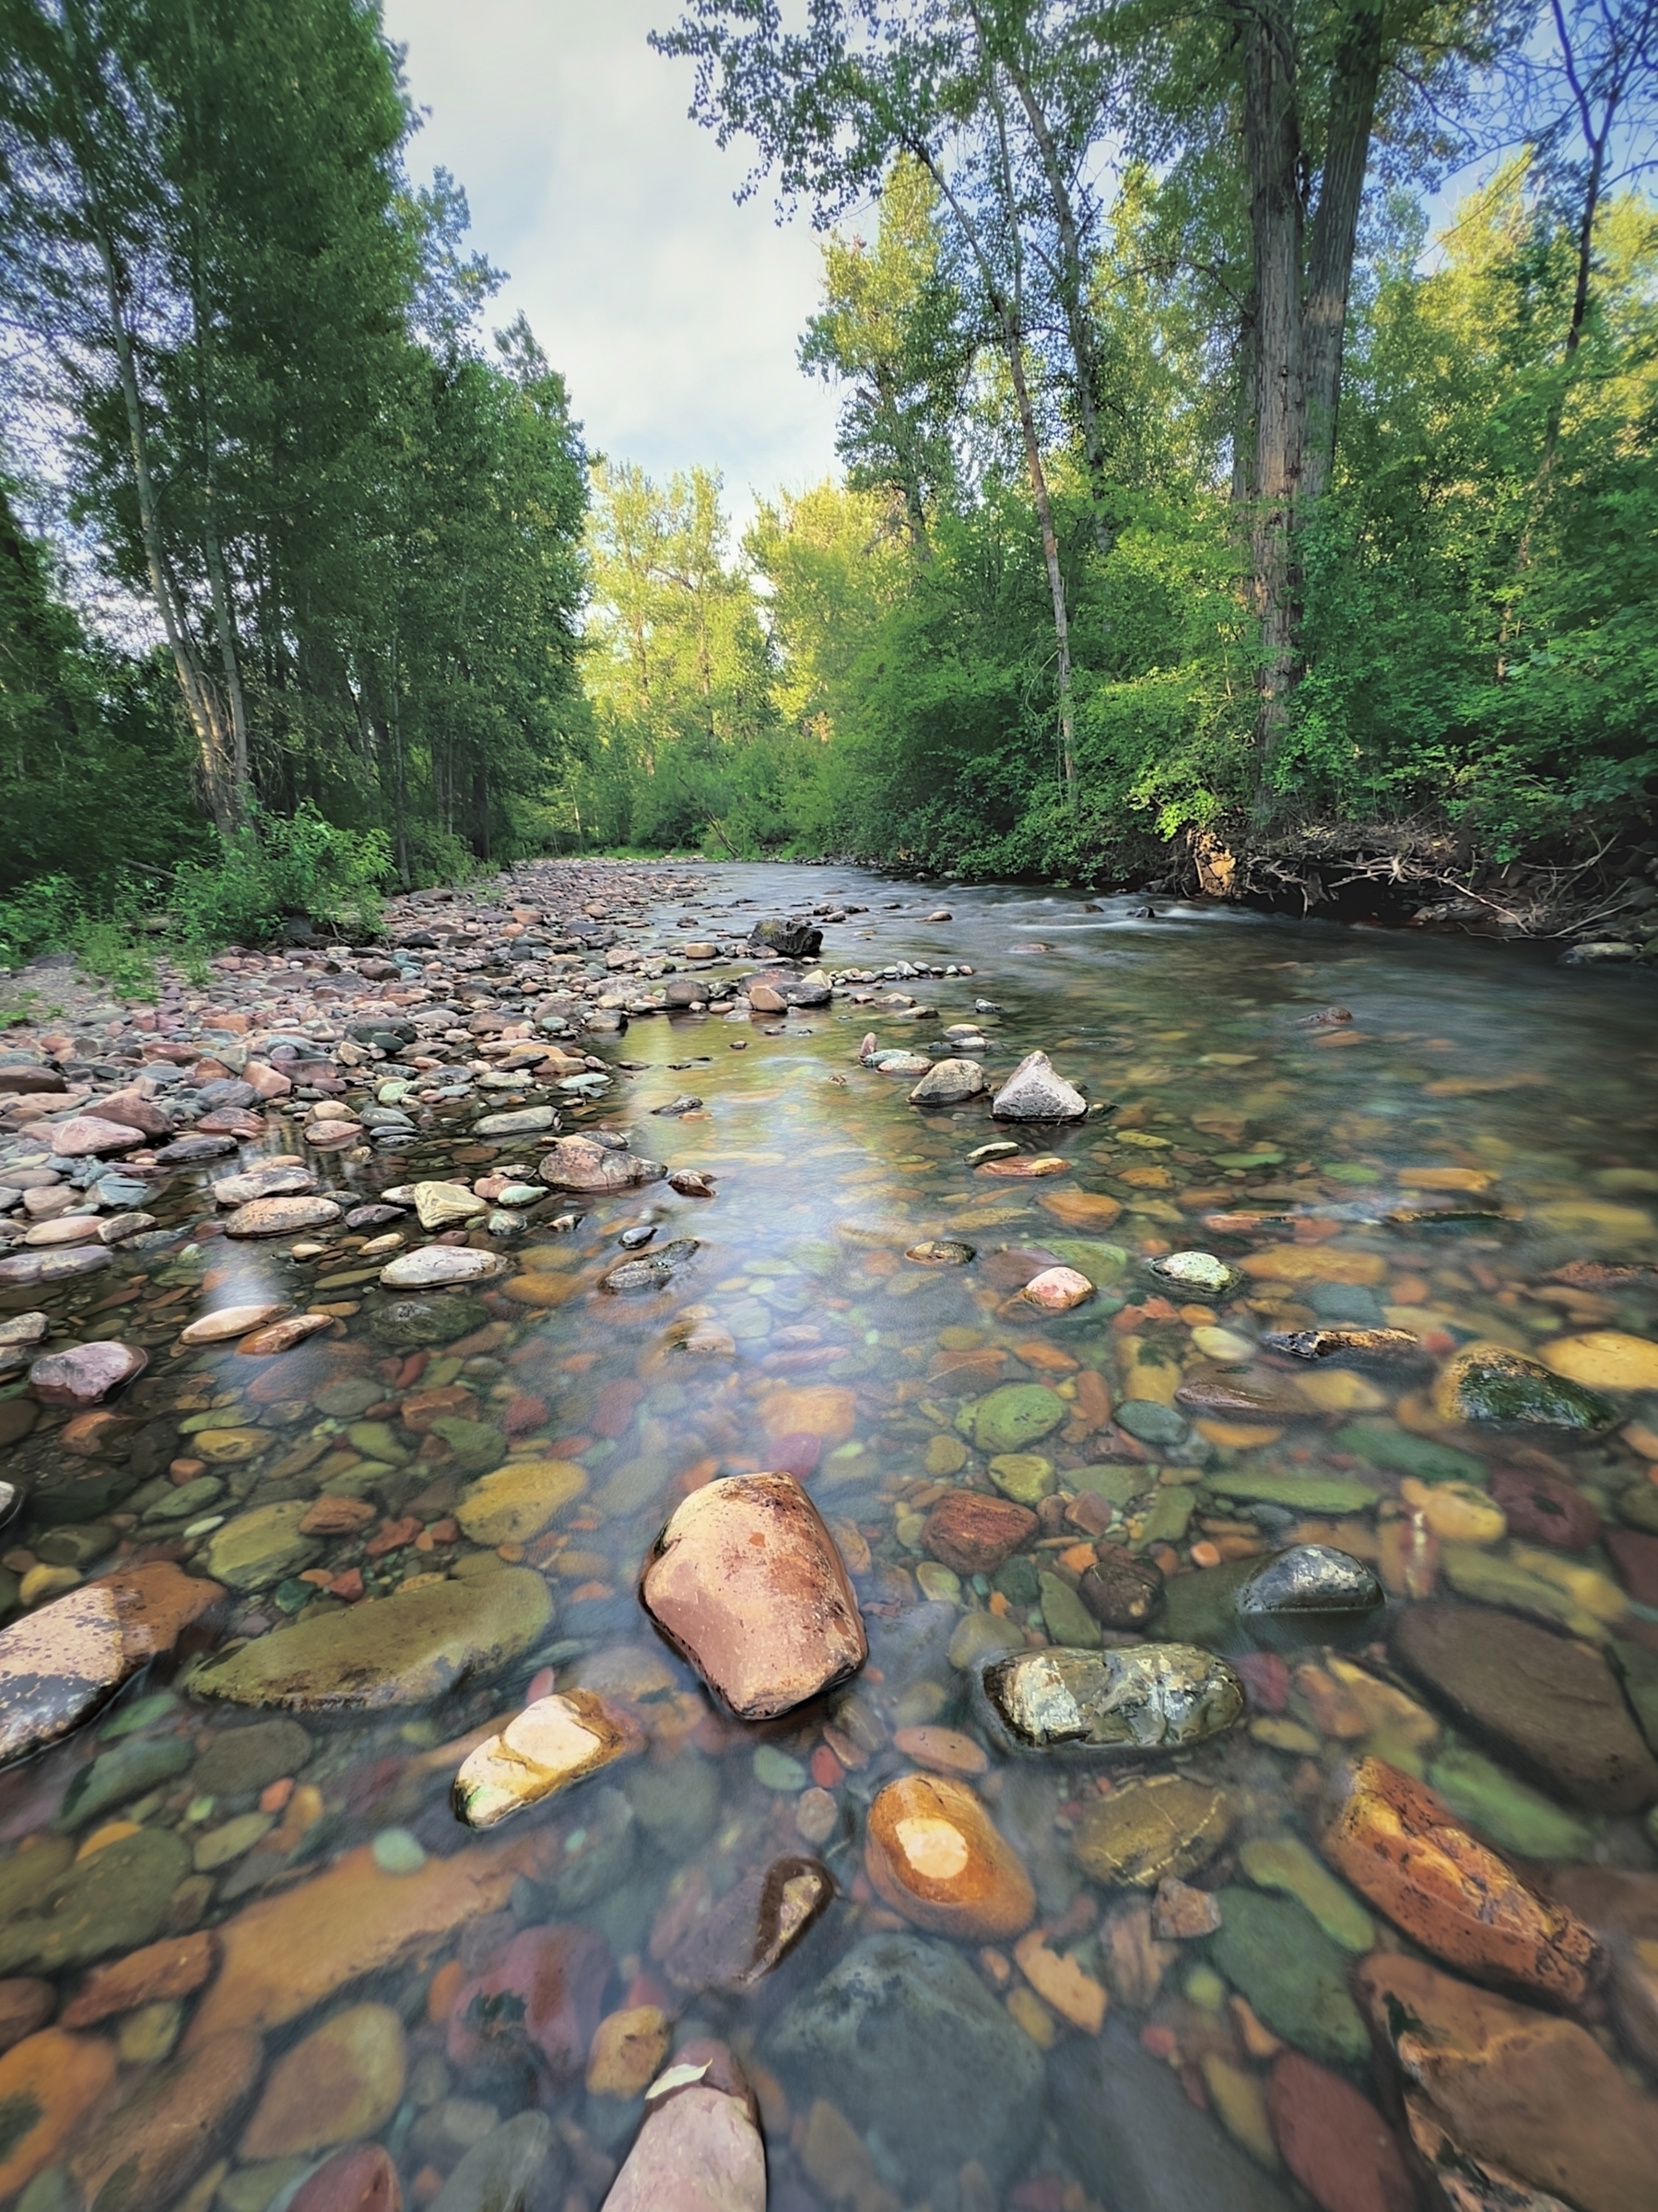 Creek with multi-colored rocks.